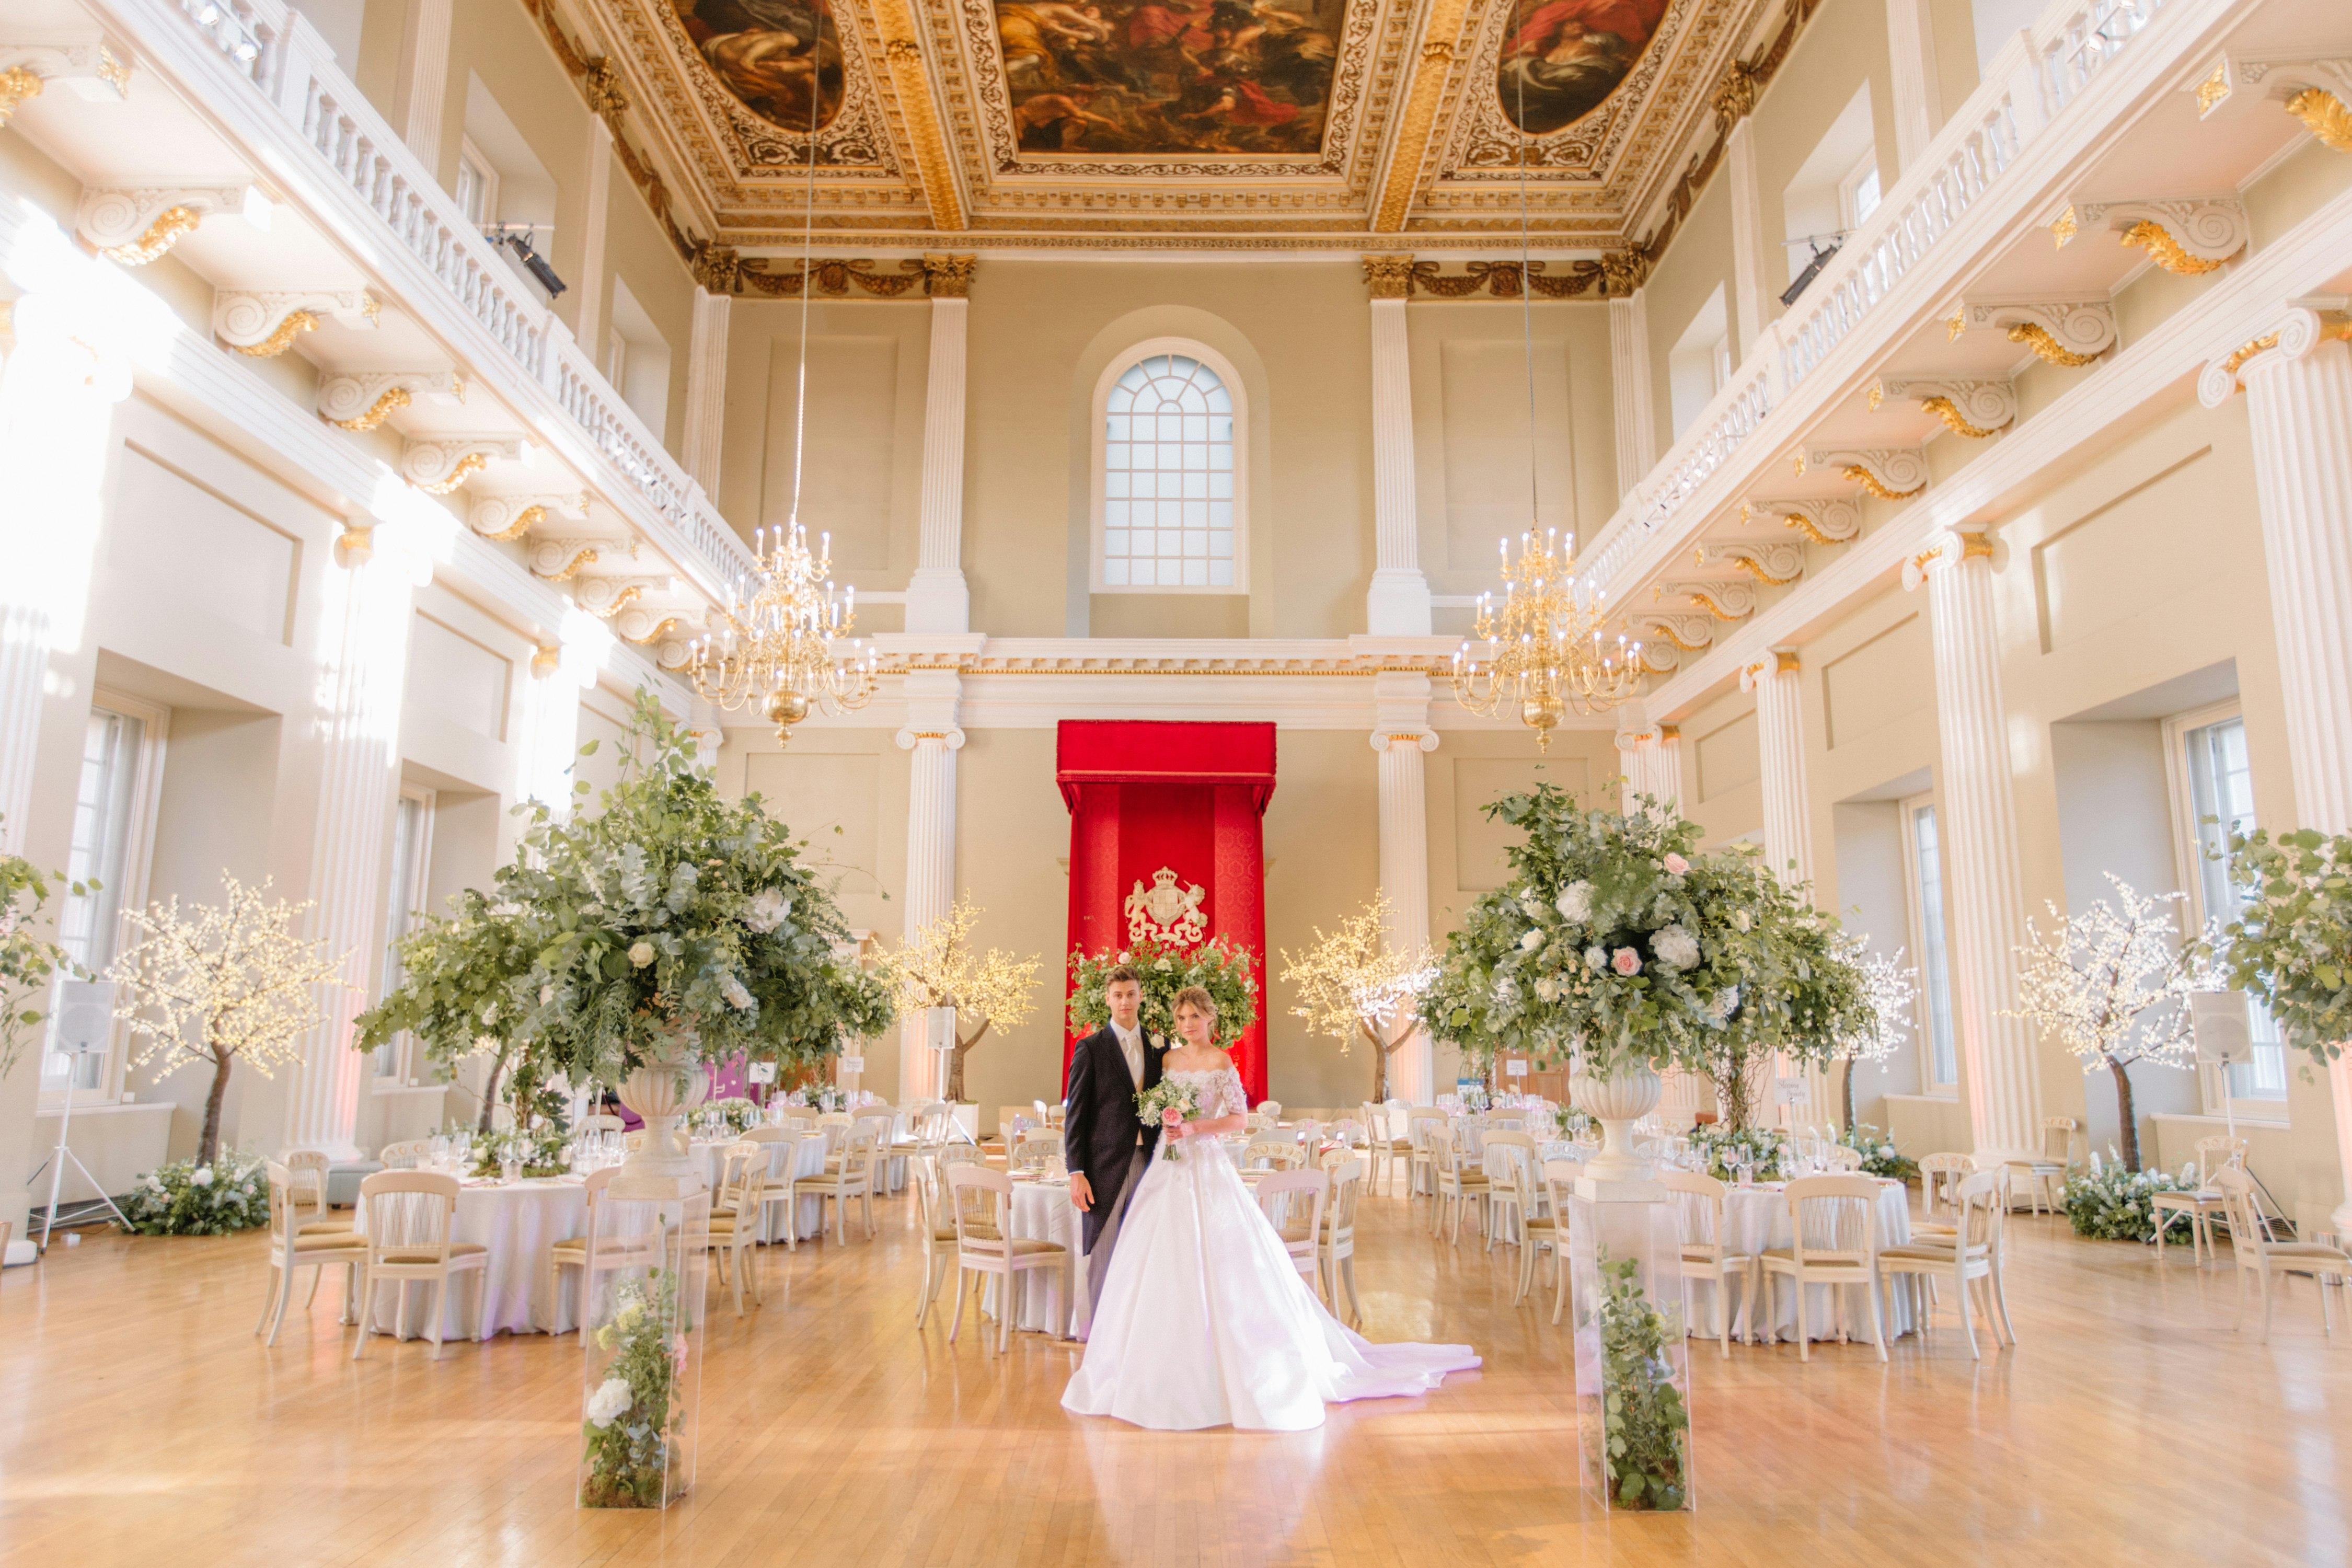 Weddings Halls Venues in London - Banqueting House